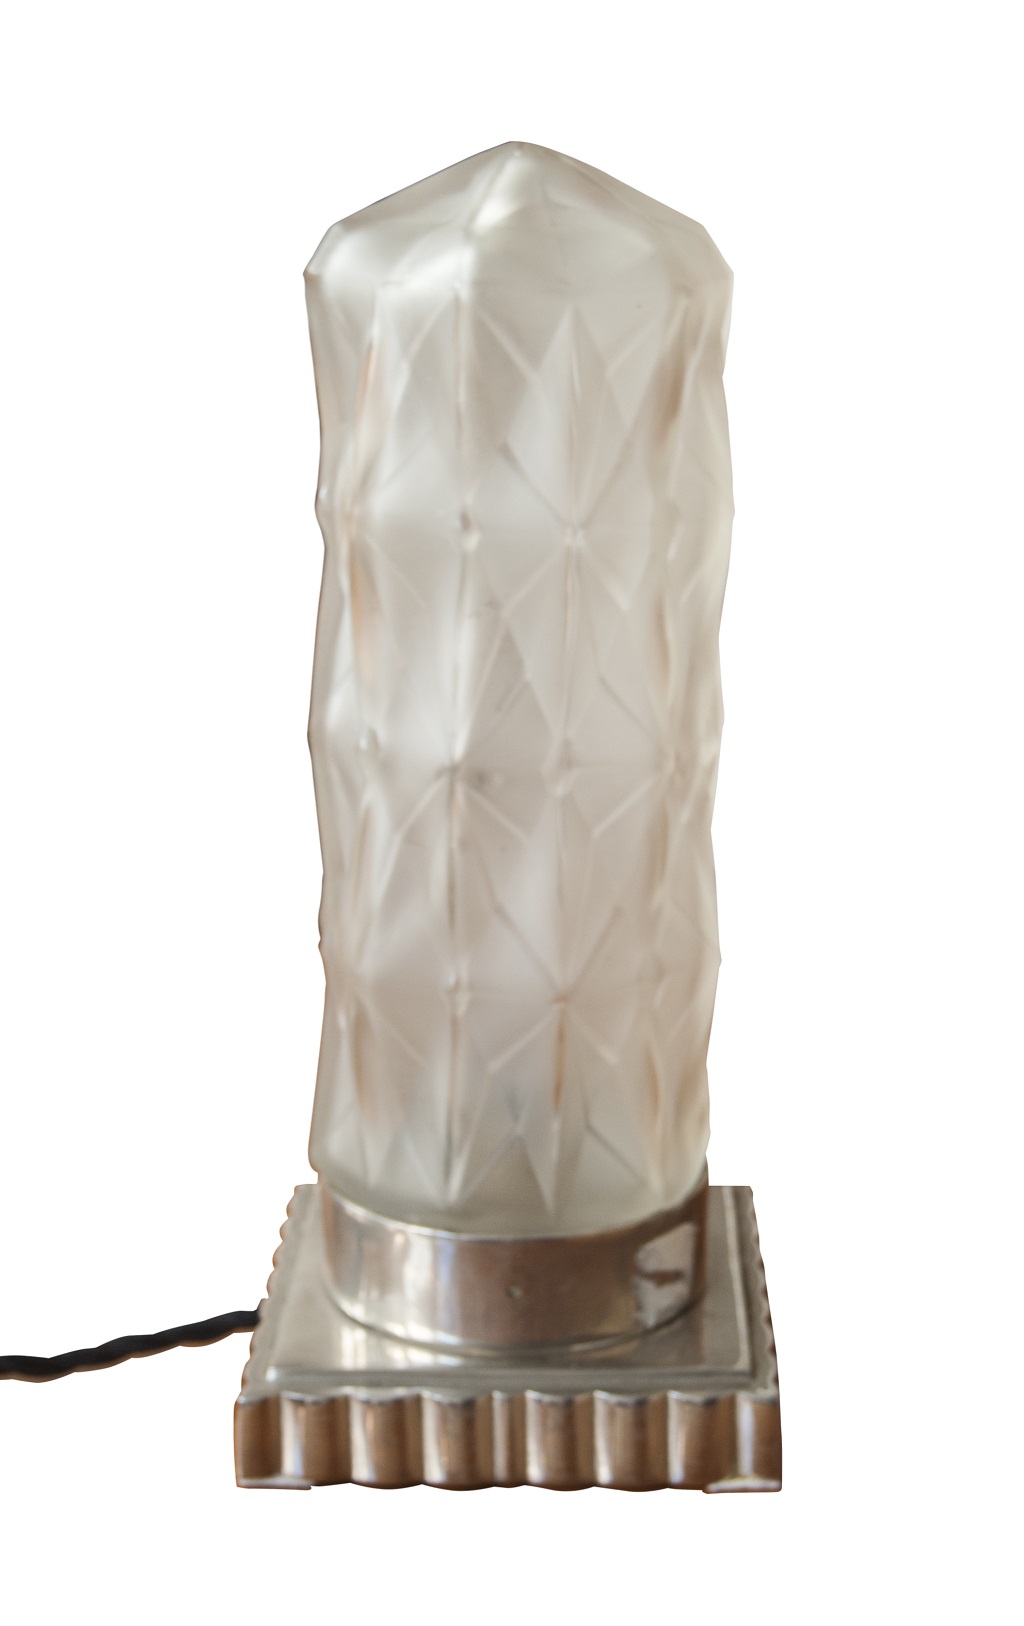 Cylindrical Art Deco table lamp